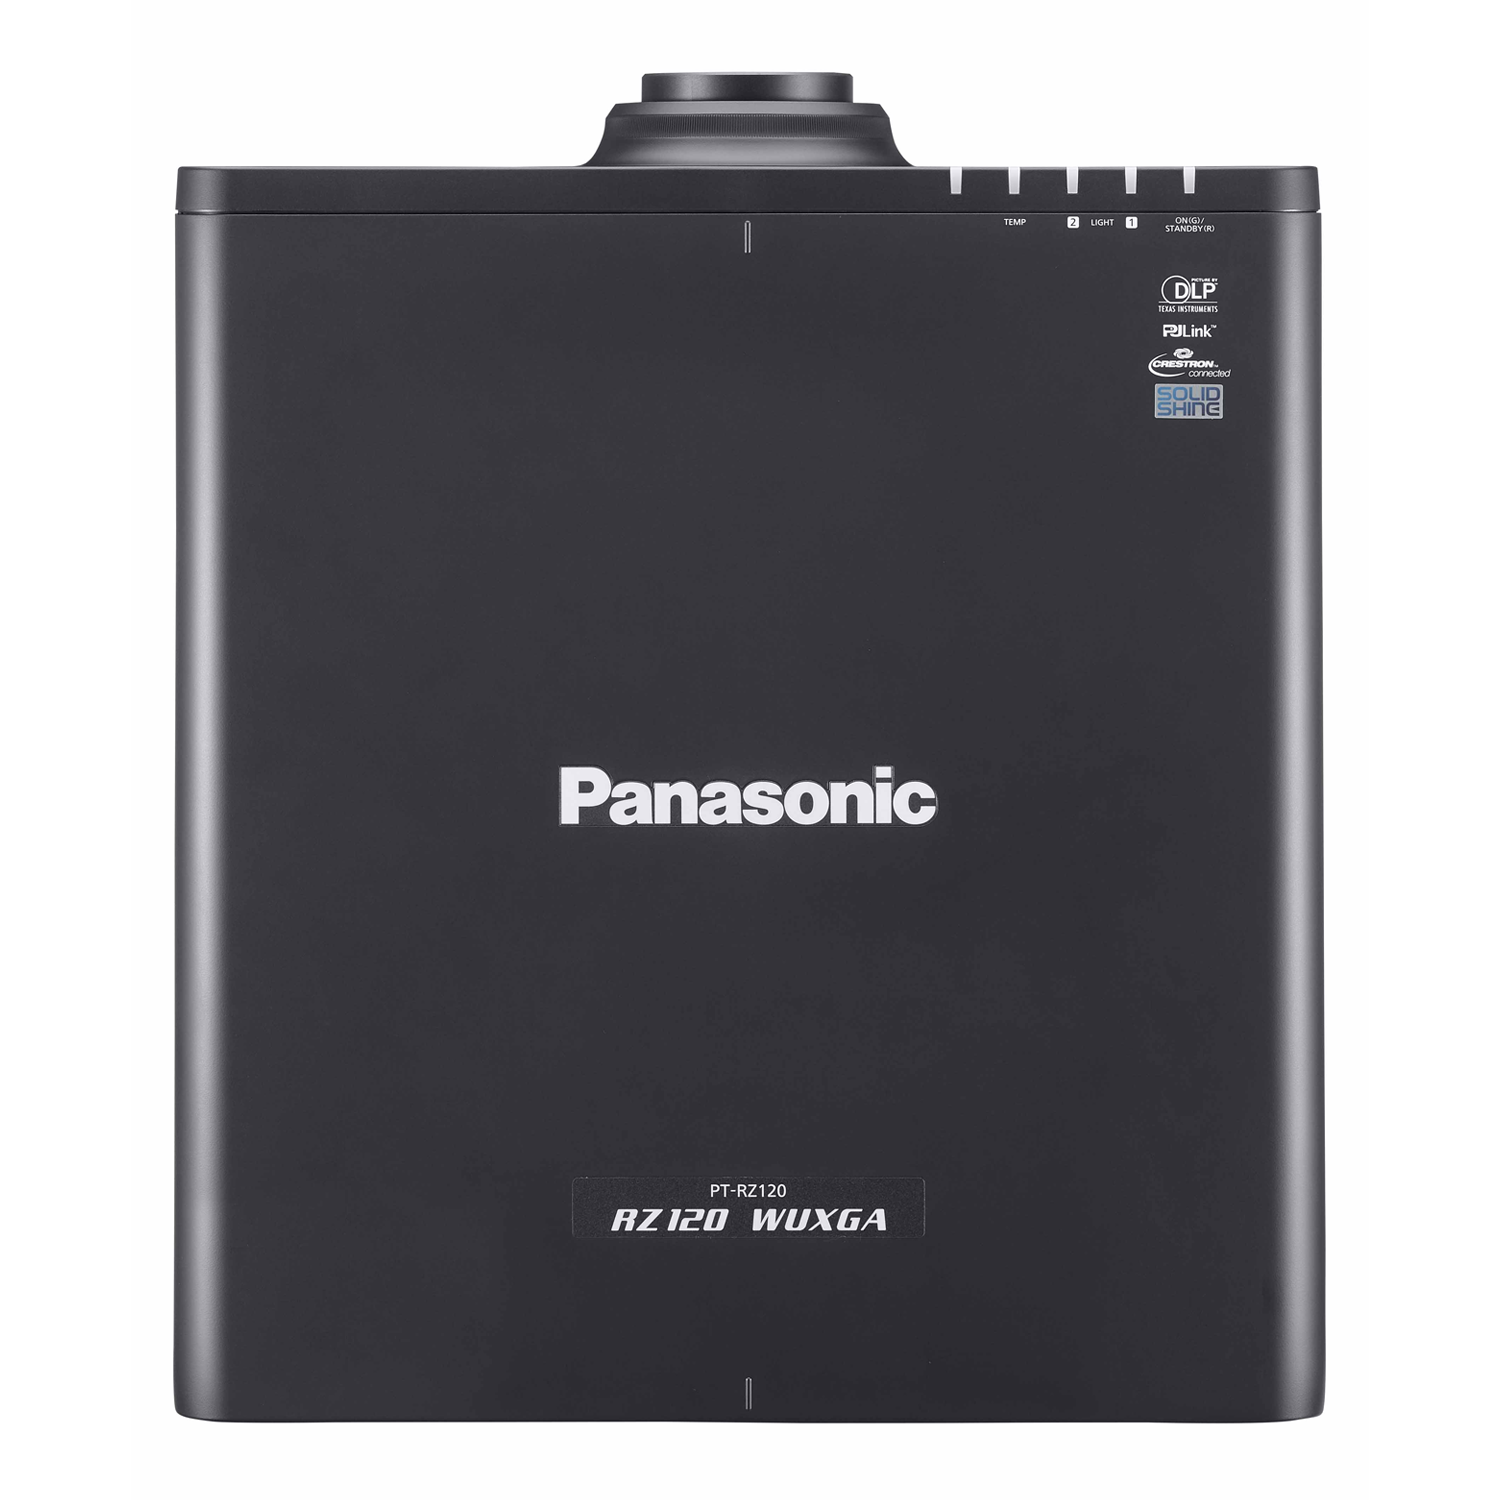 Panasonic PT-RZ120 12,000 Lumen DLP Projector